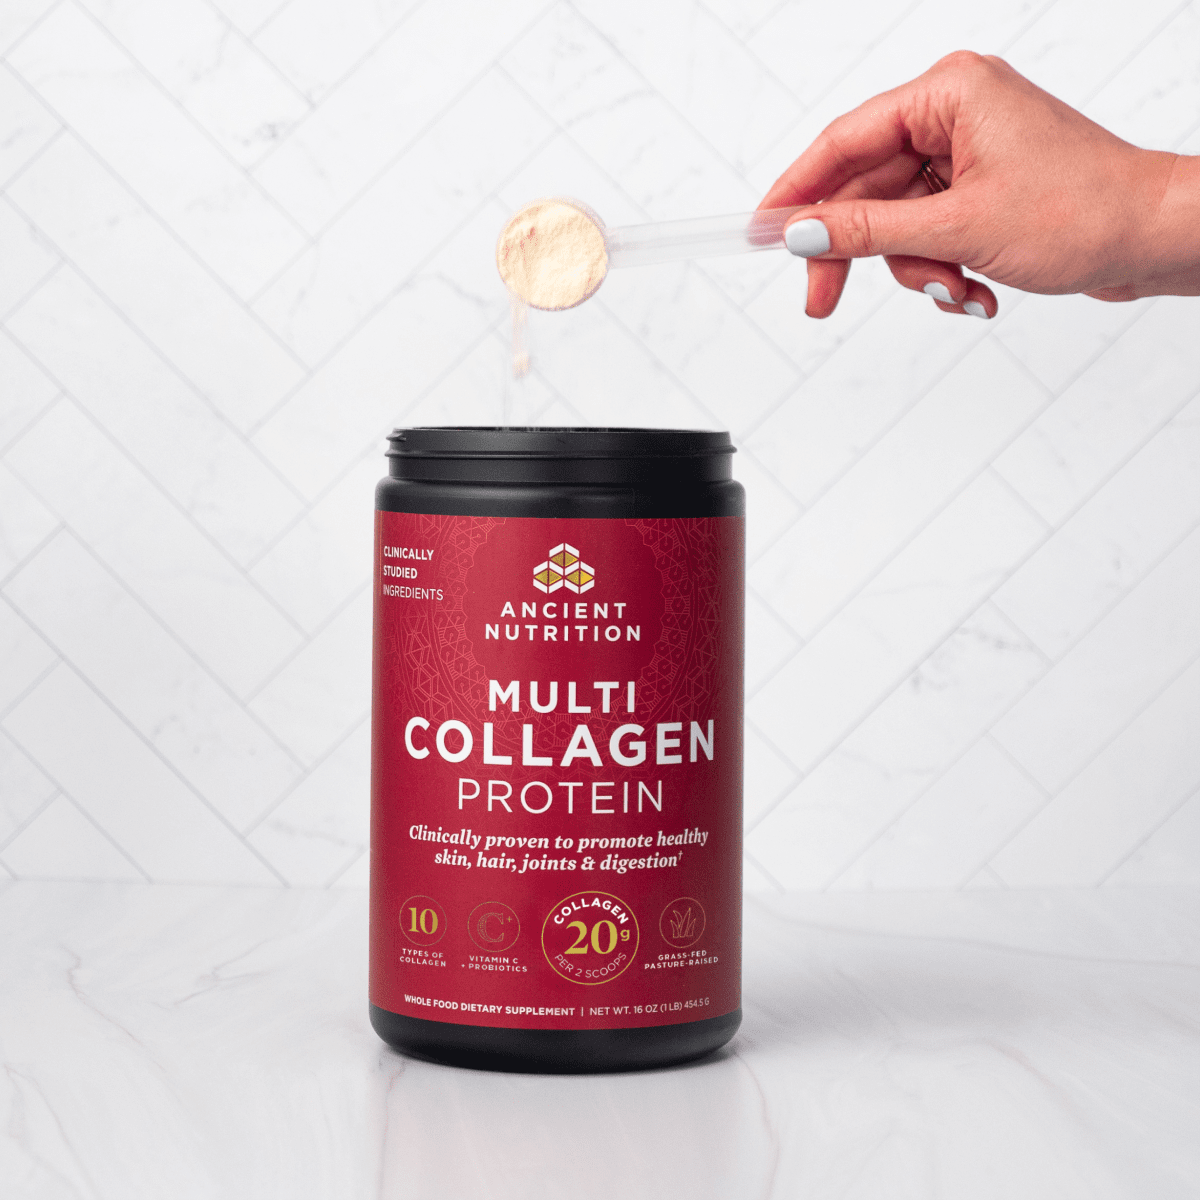 1 bottle of multi collagen protein powder on a kitchen counter